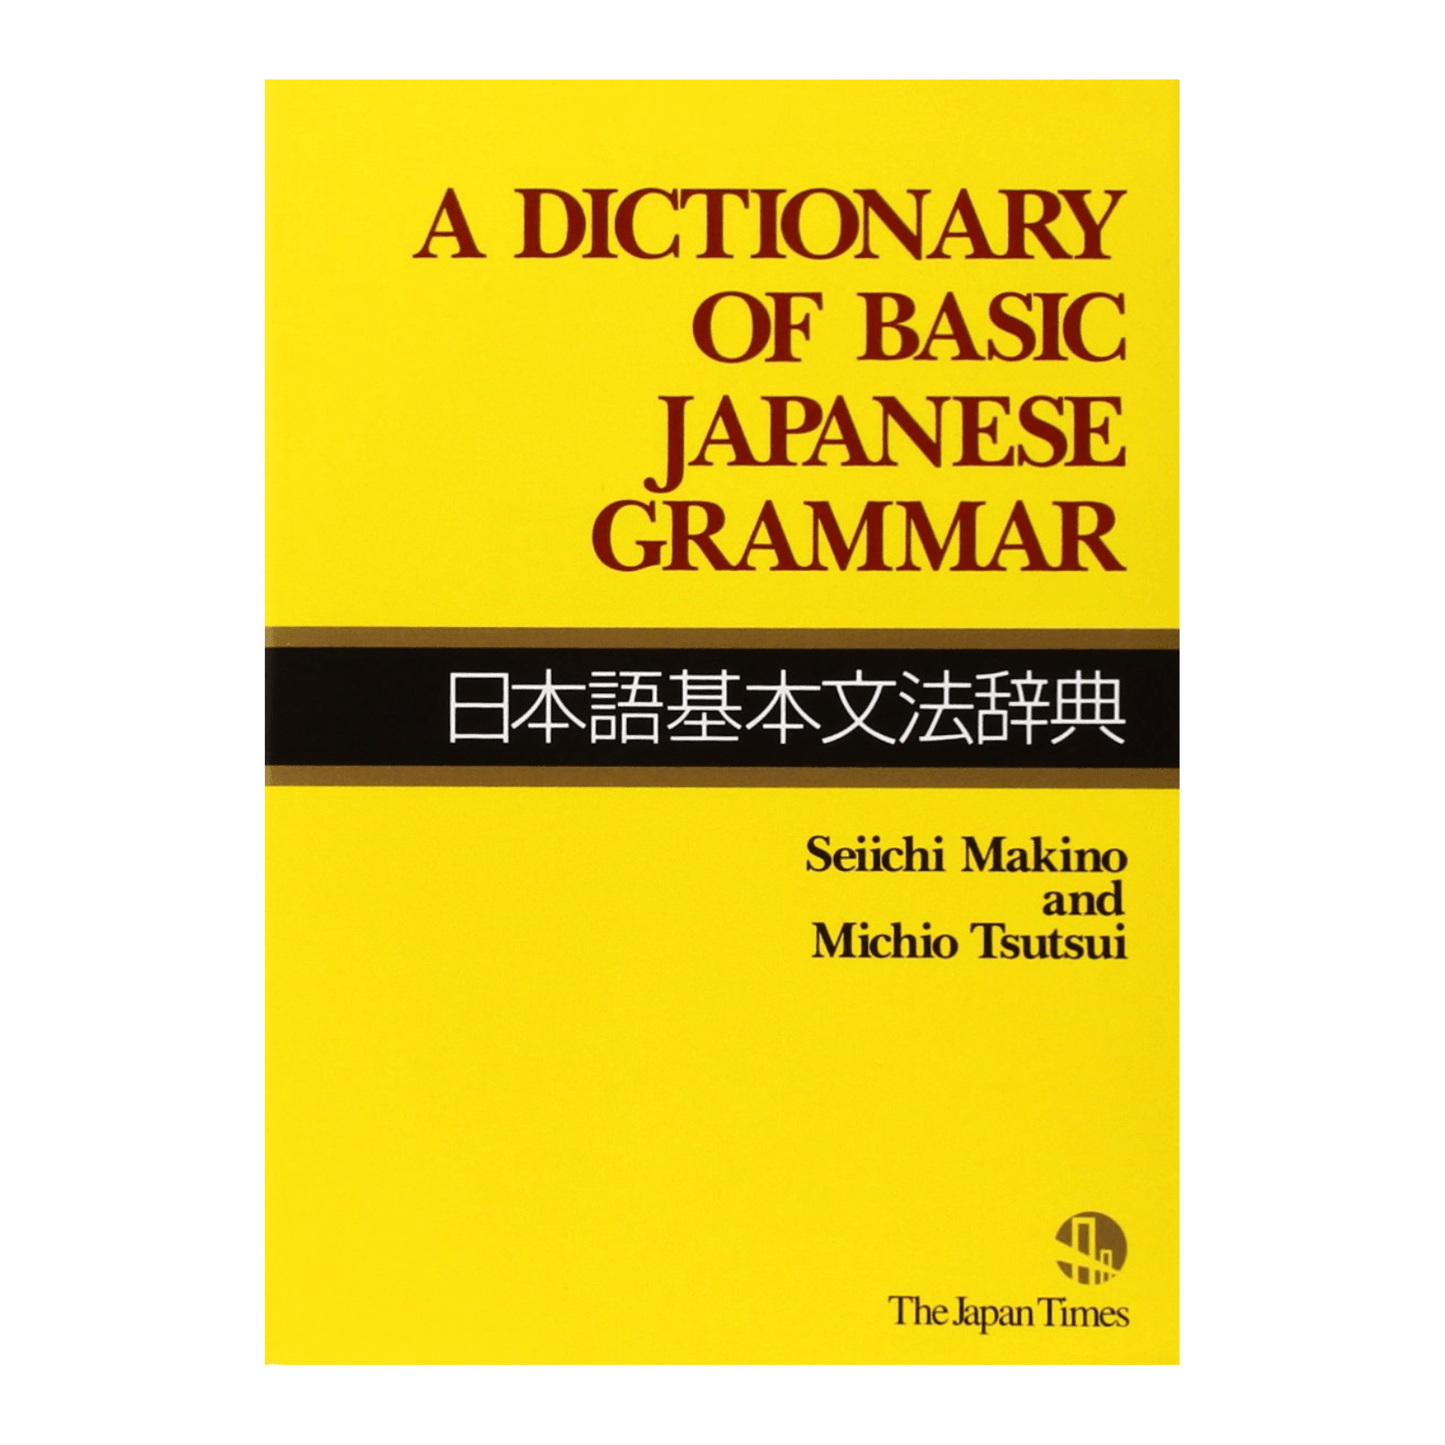 Manual Japonês | Um dicionário de gramática japonesa básica (日本語基本文法辞典) ChitoroShop